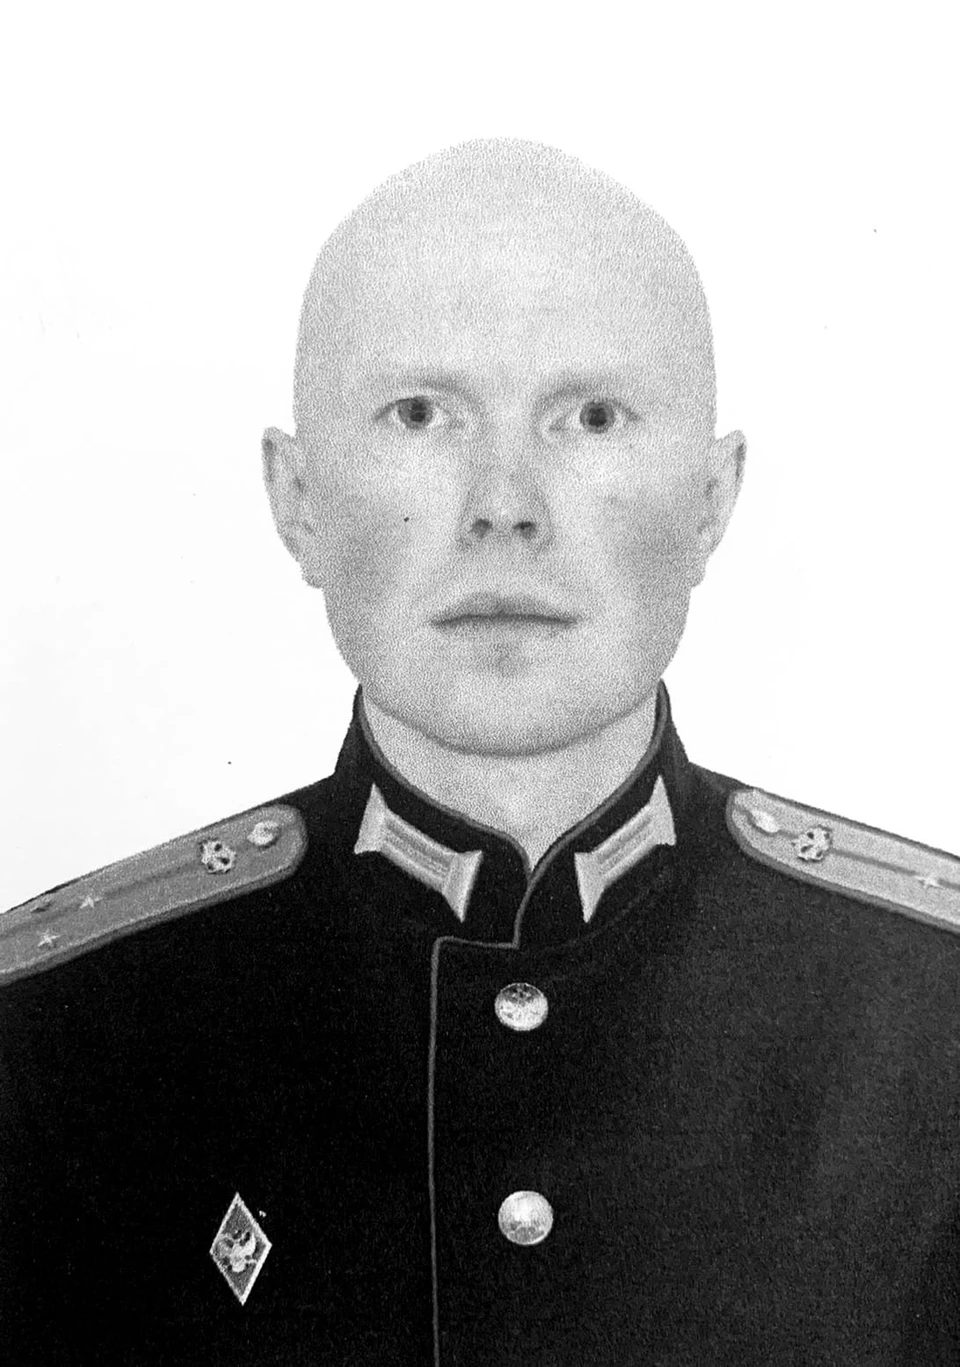 Дмитрий Вдовин погиб во время спецоперации. Фото: /vk.com/a.brechalov